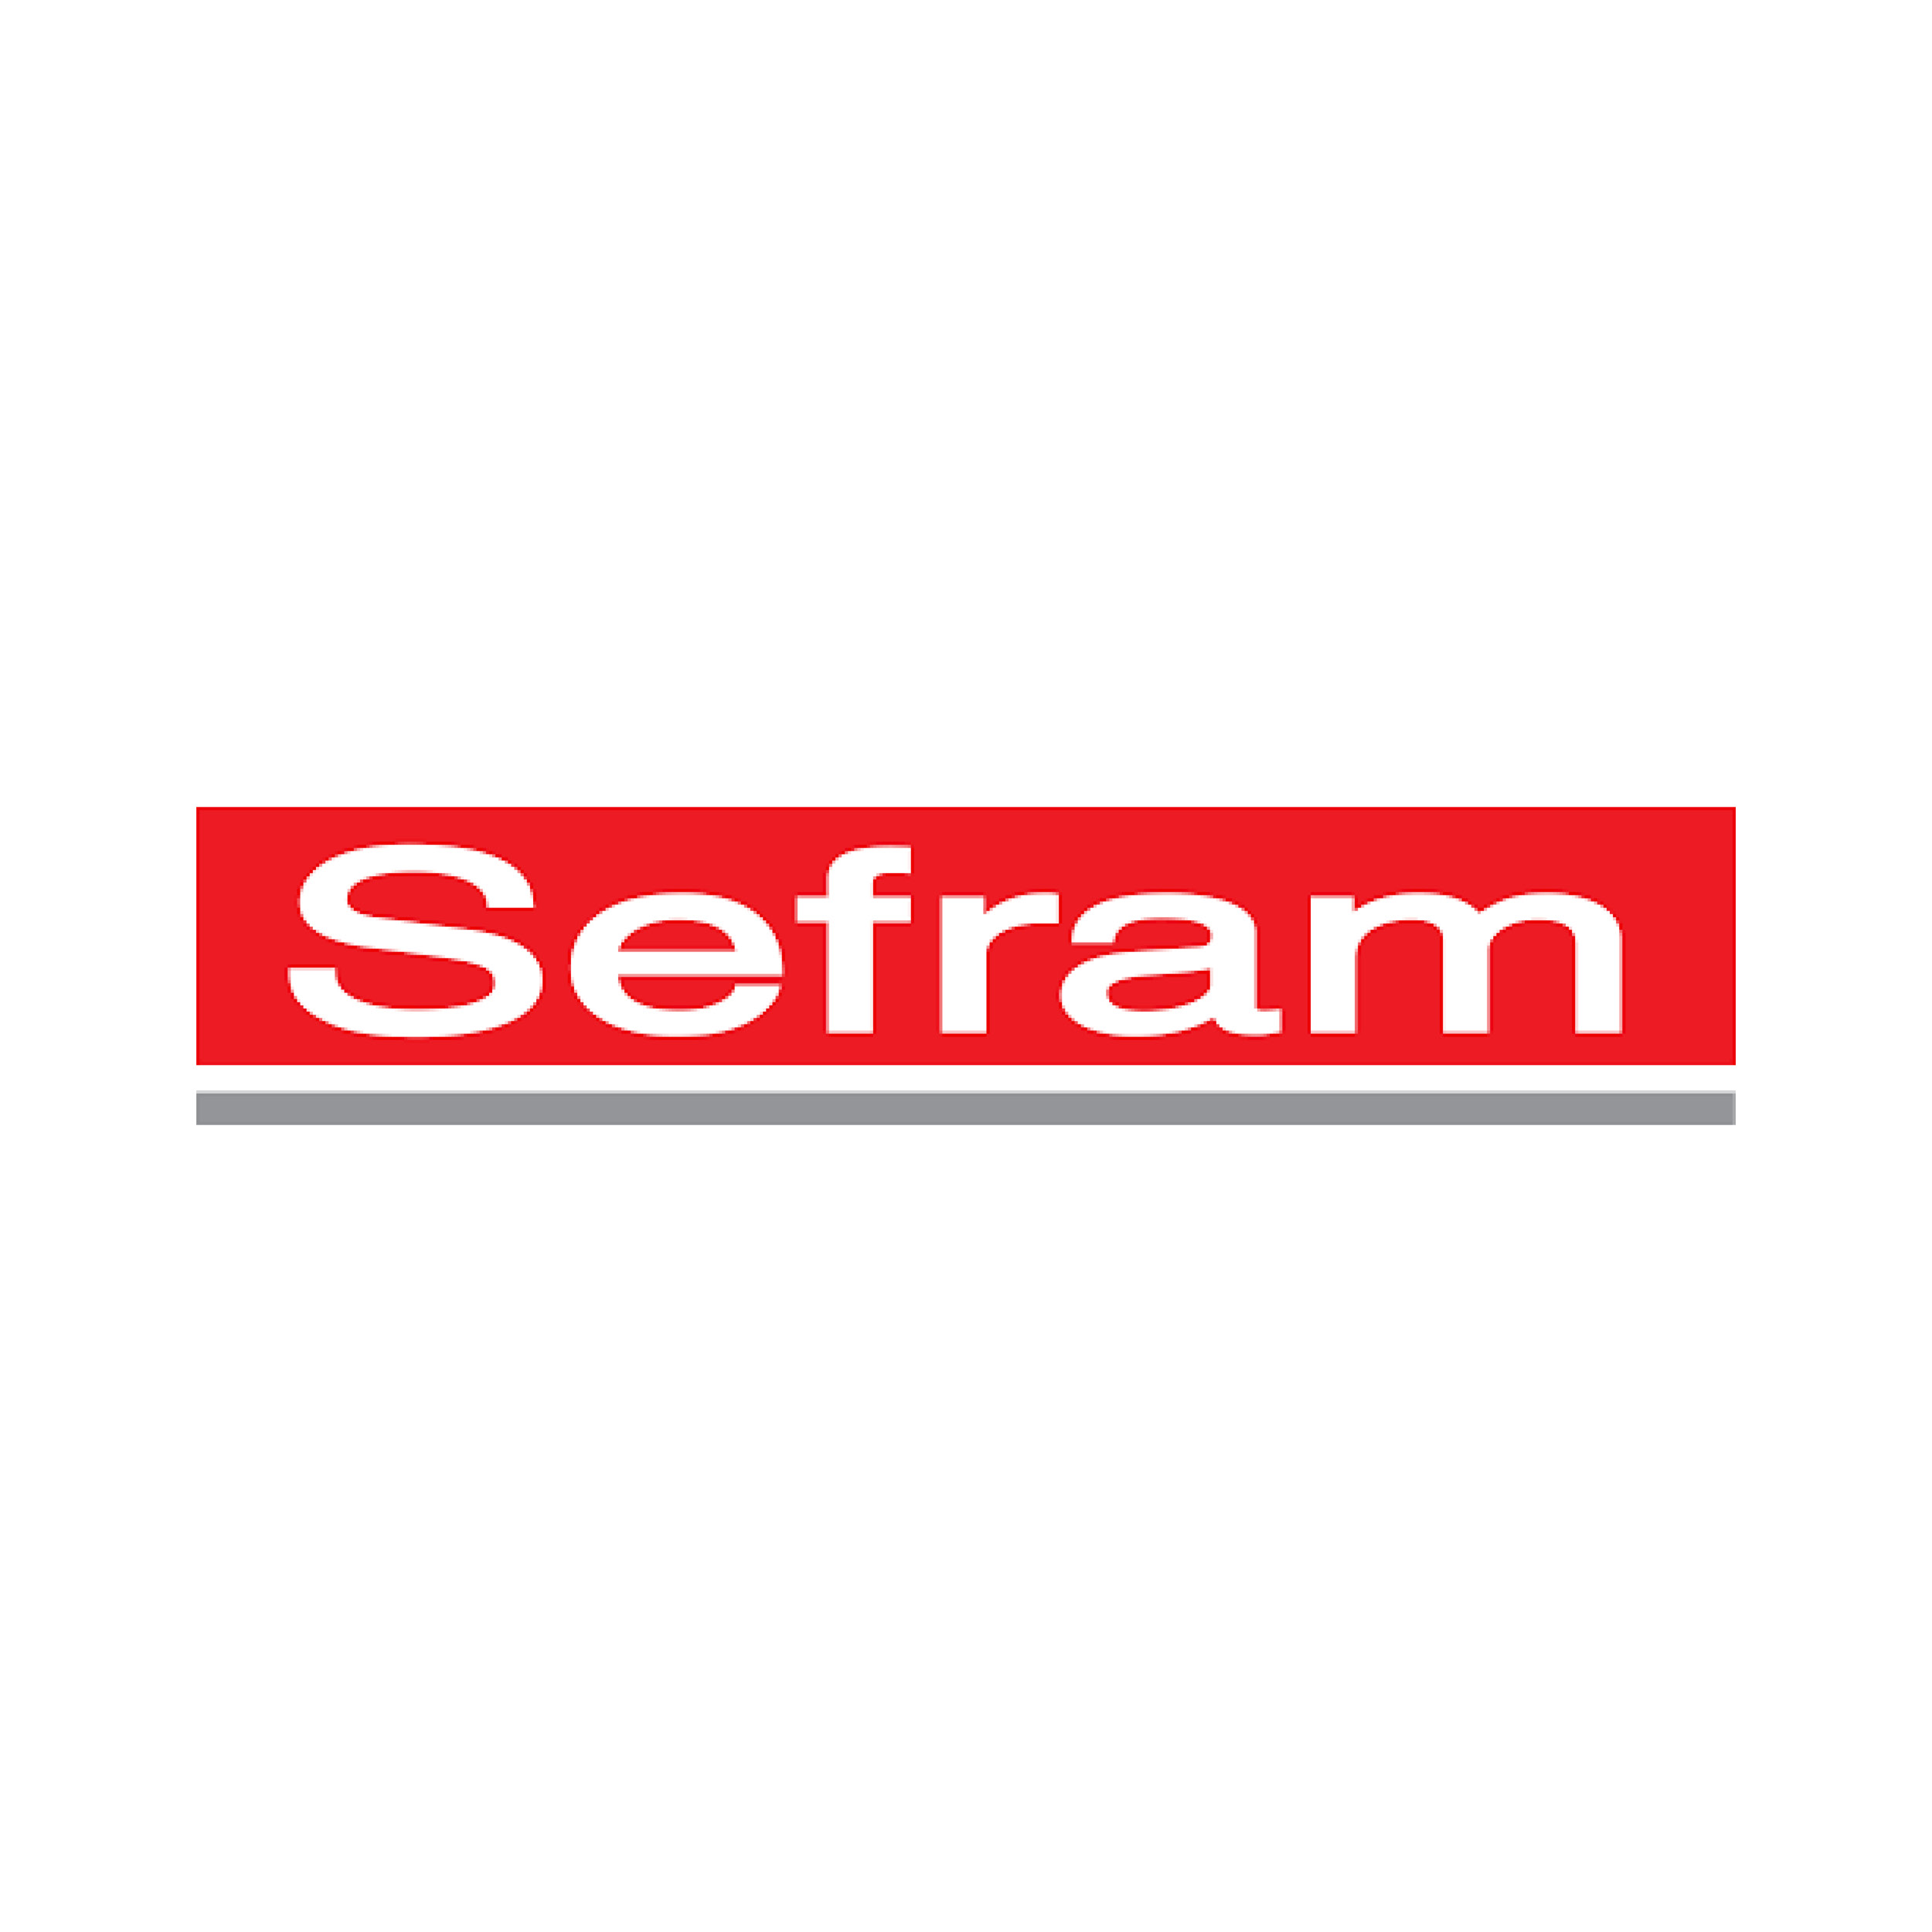 Logo de la marque référence Sefram